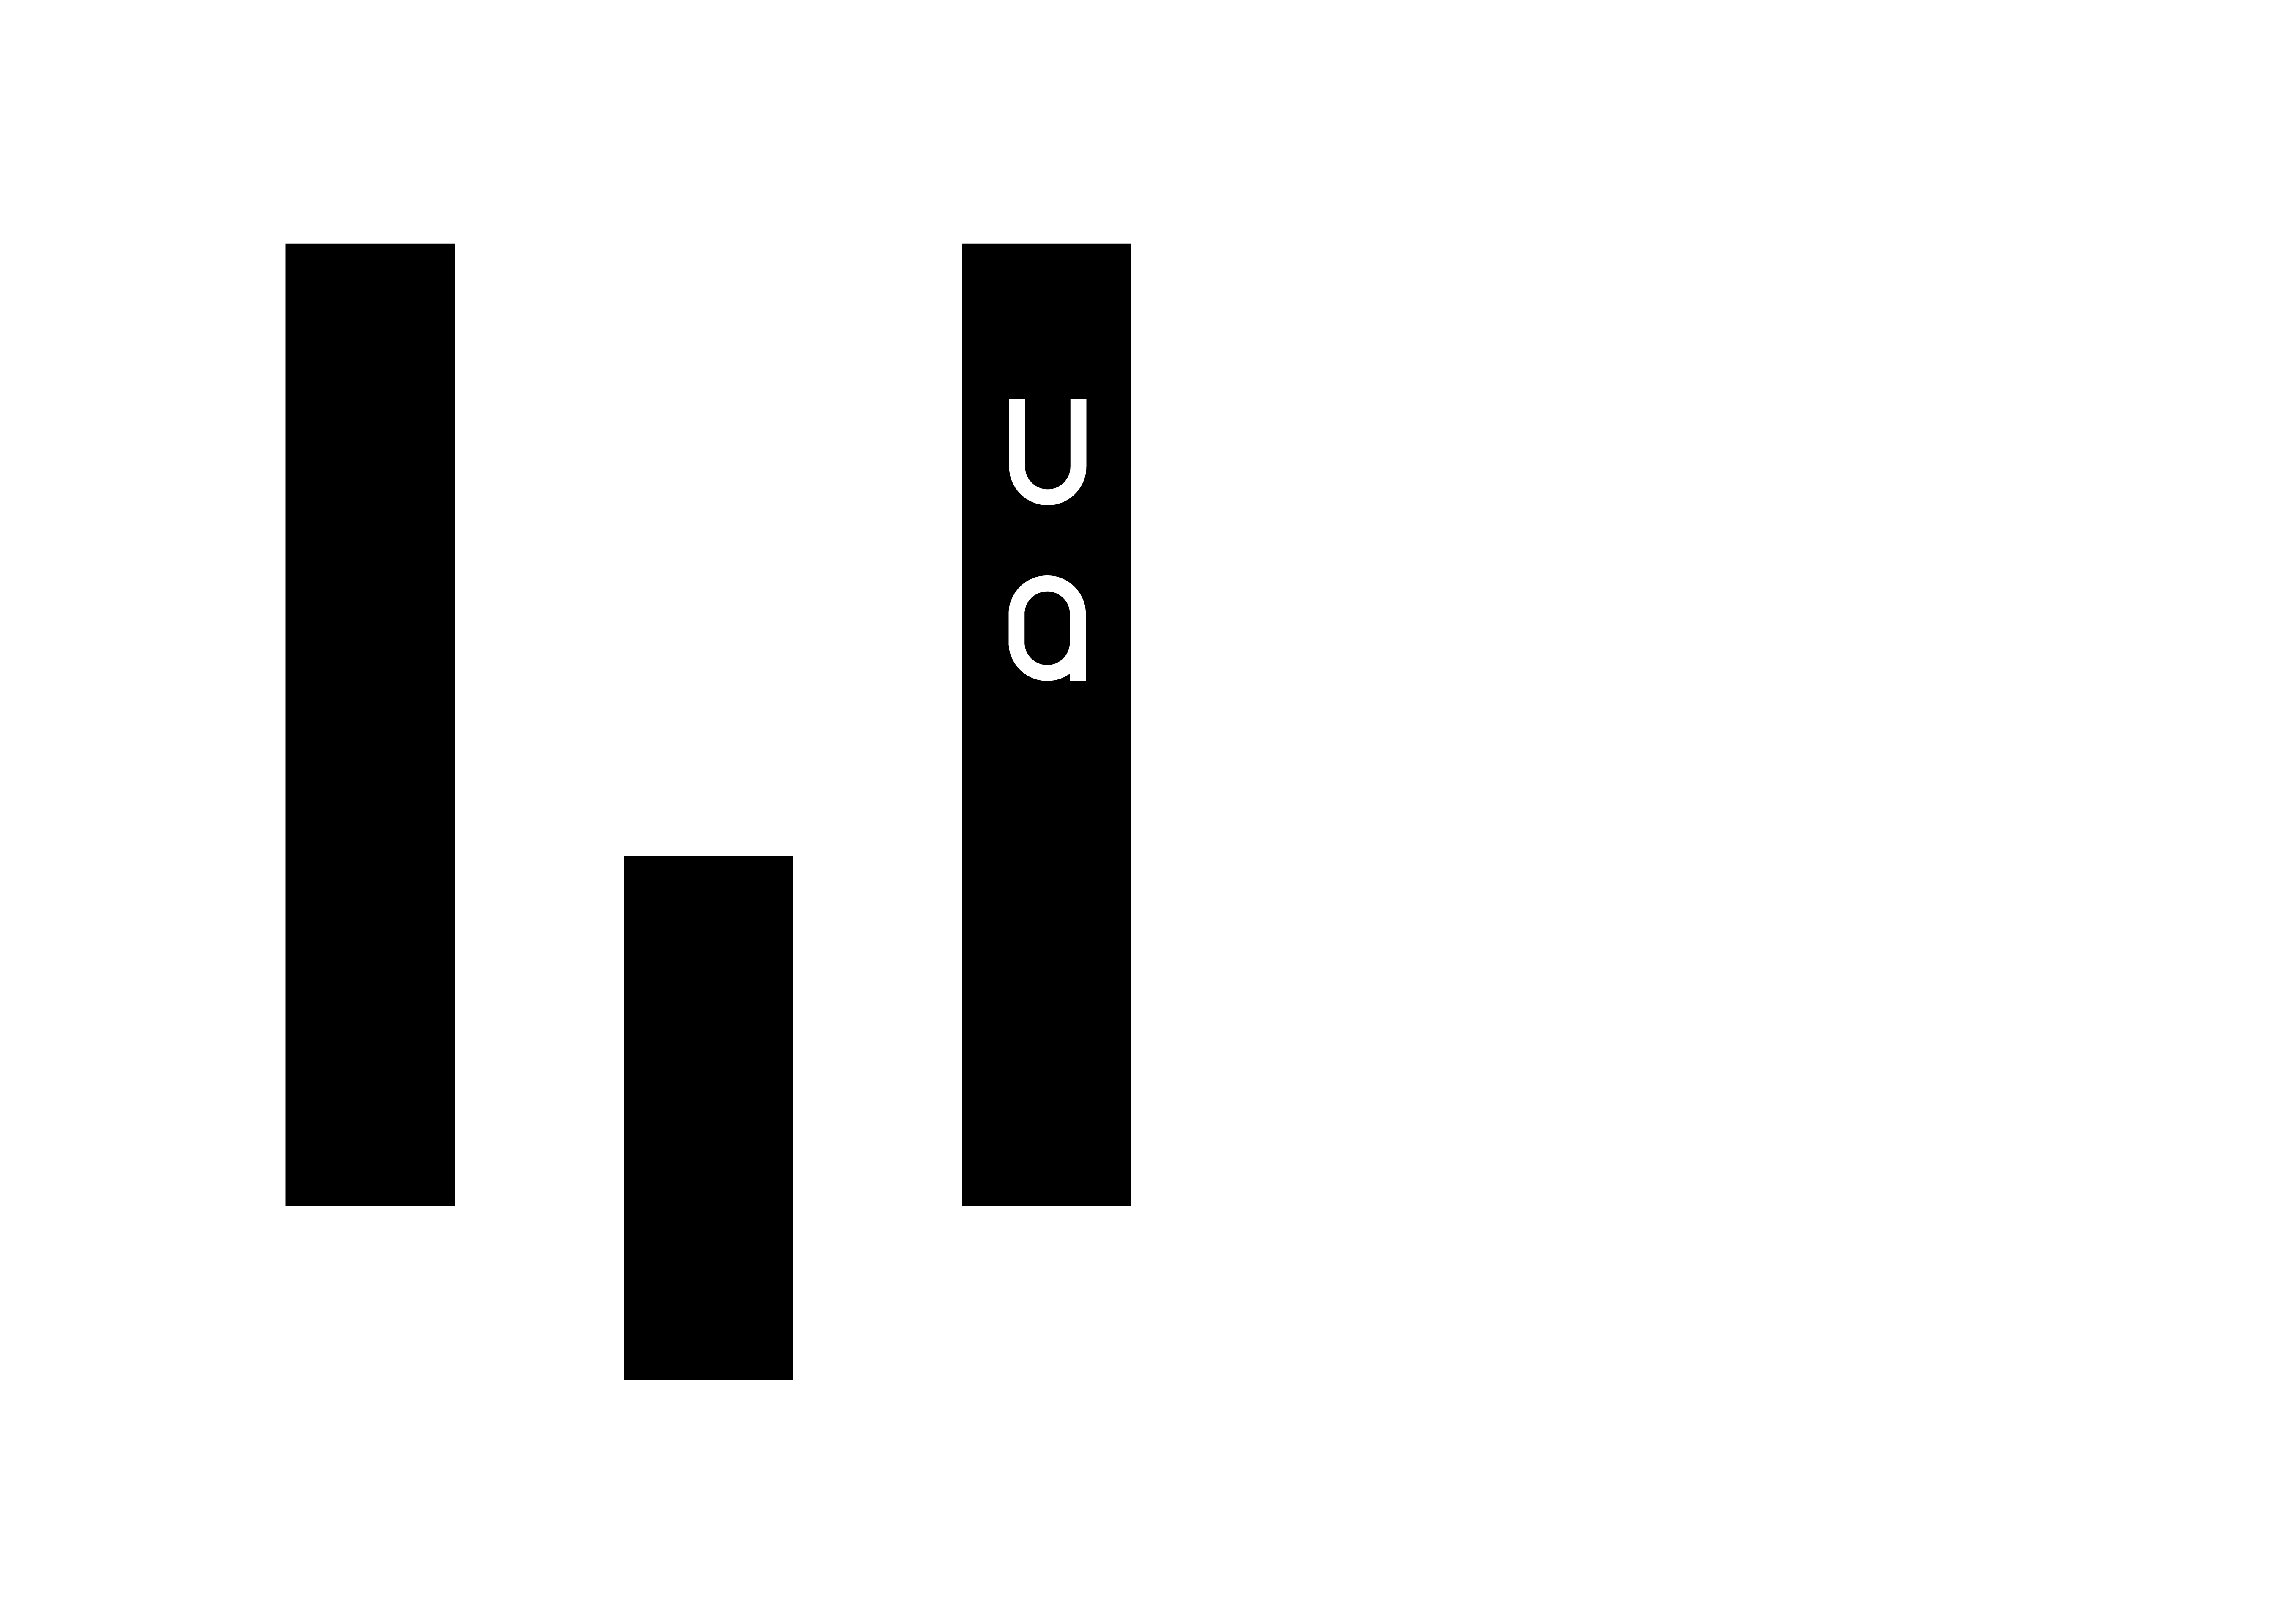 Documenting Ukraine logo in b&w